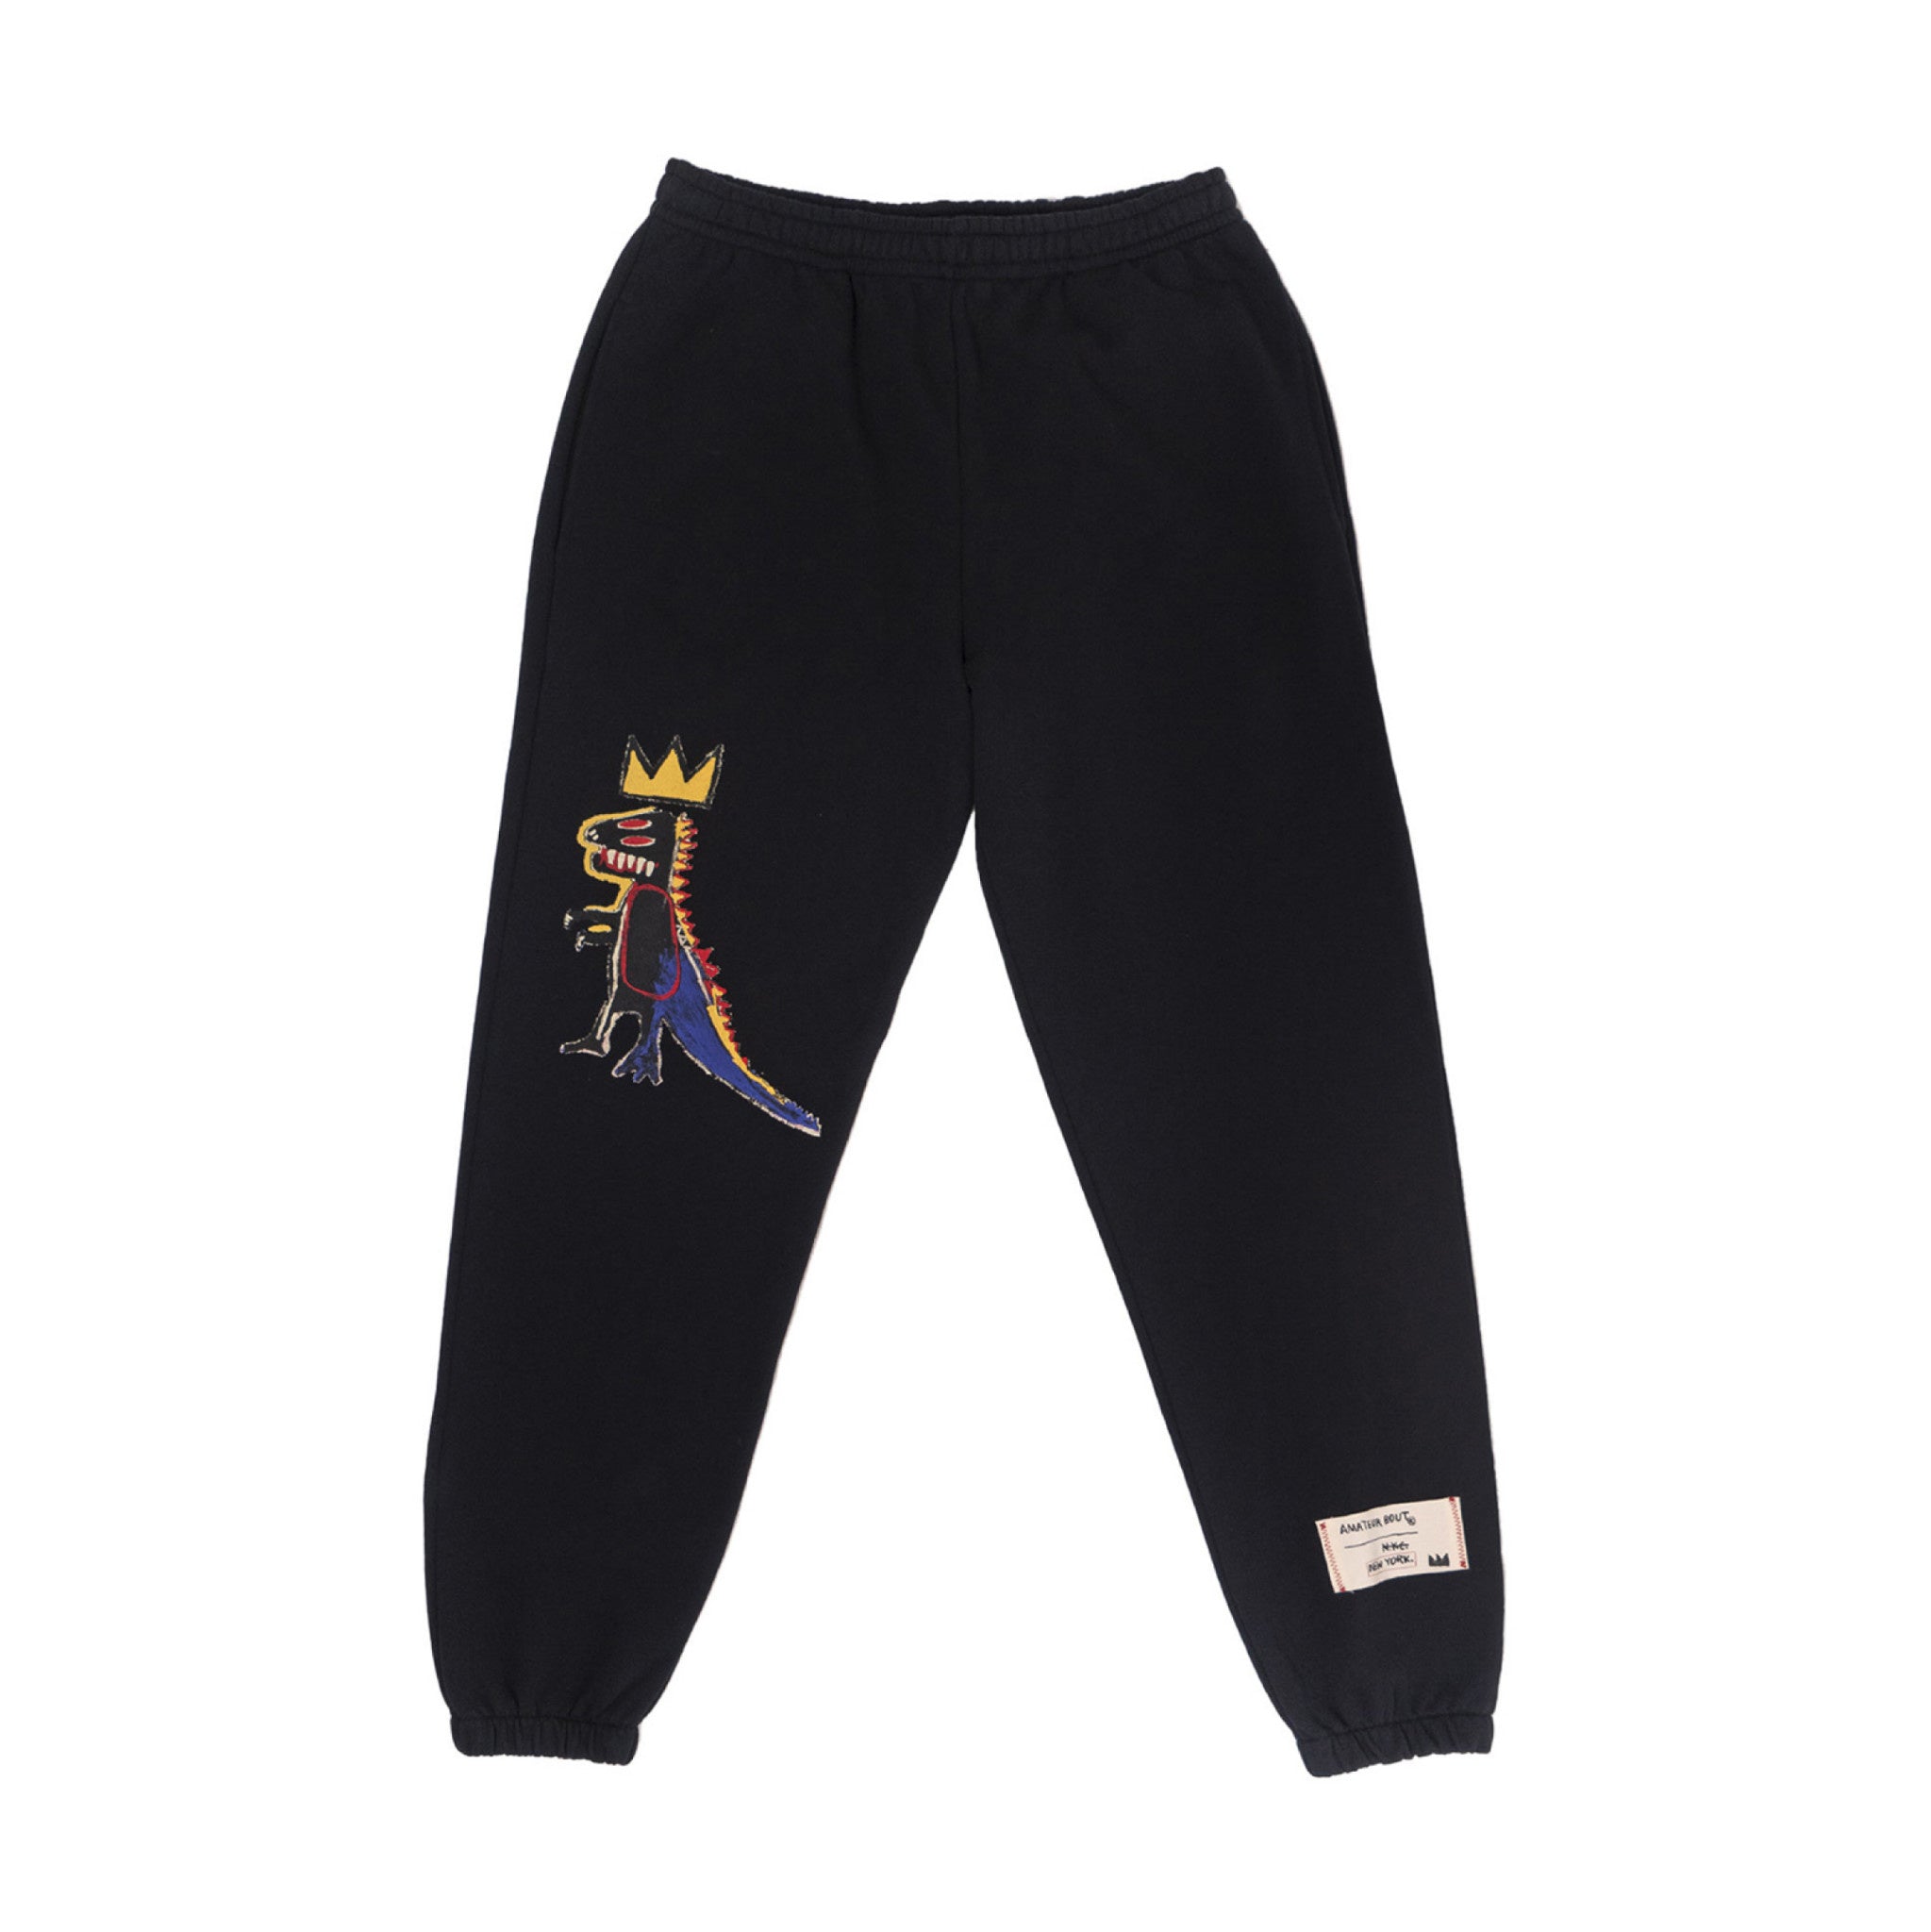 Basquiat PEZ DISPENSER Sweatpants - Wynwood Walls Shop